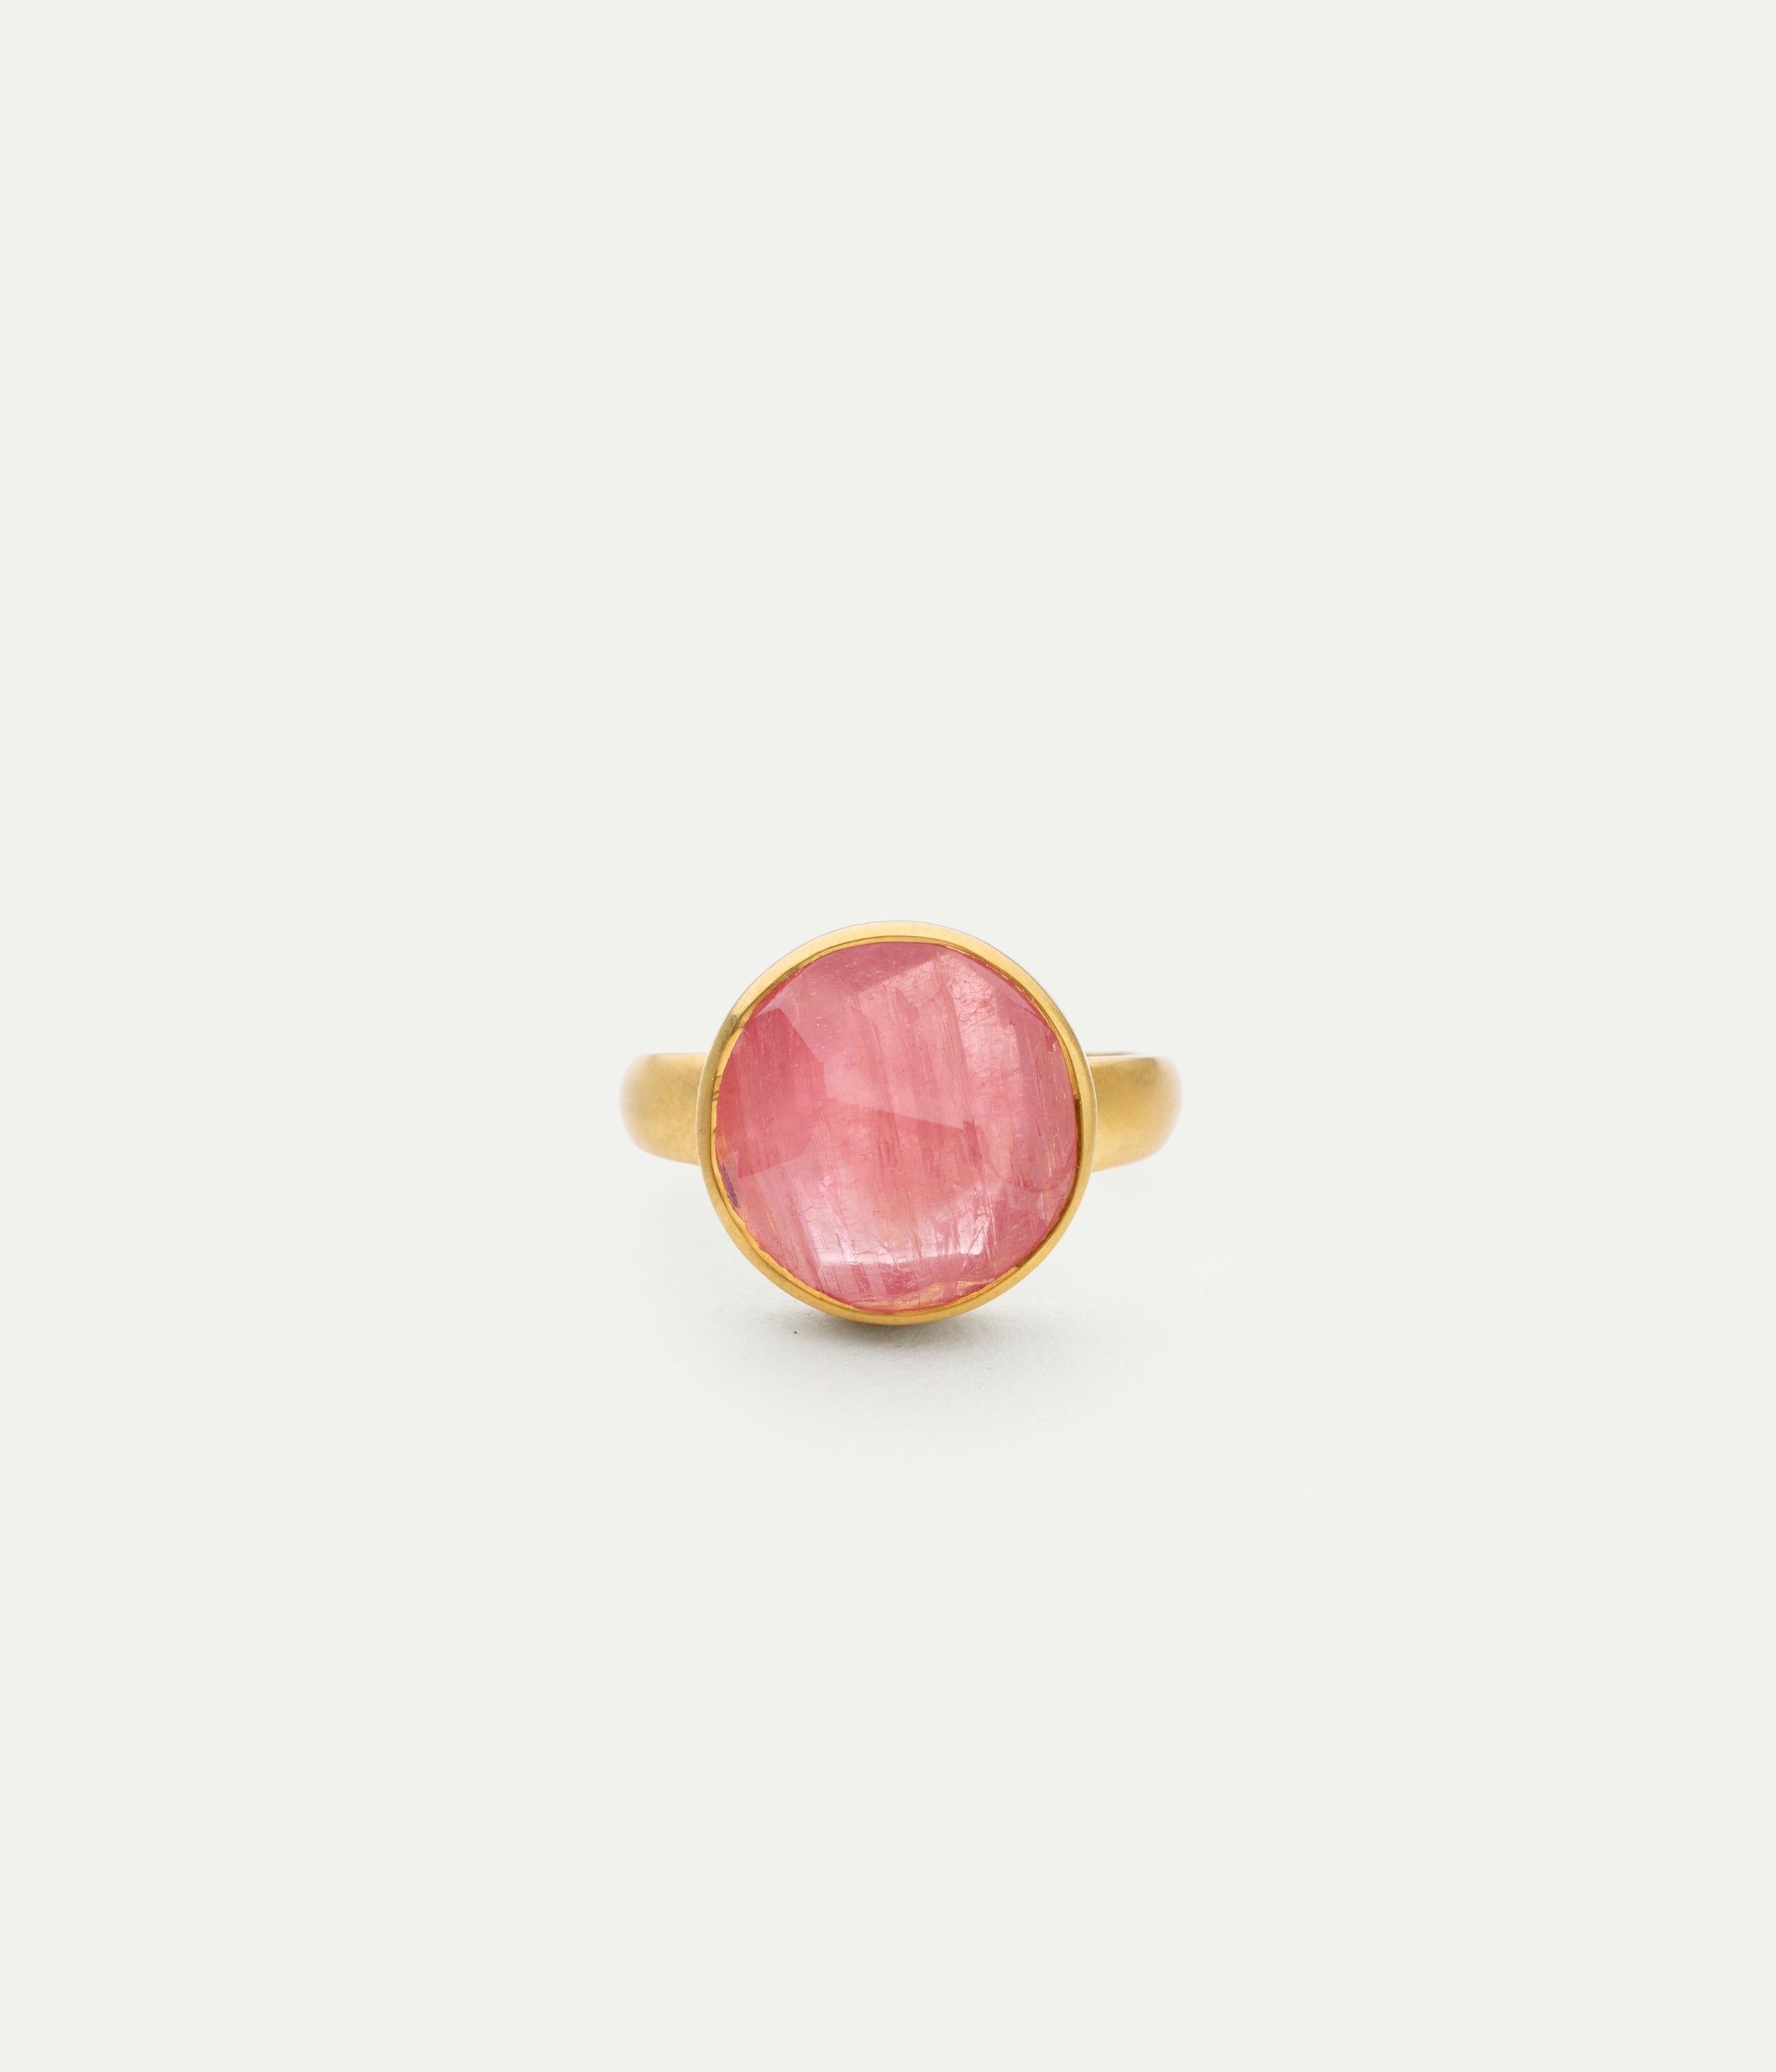 New Day Greek pink tourmaline ring